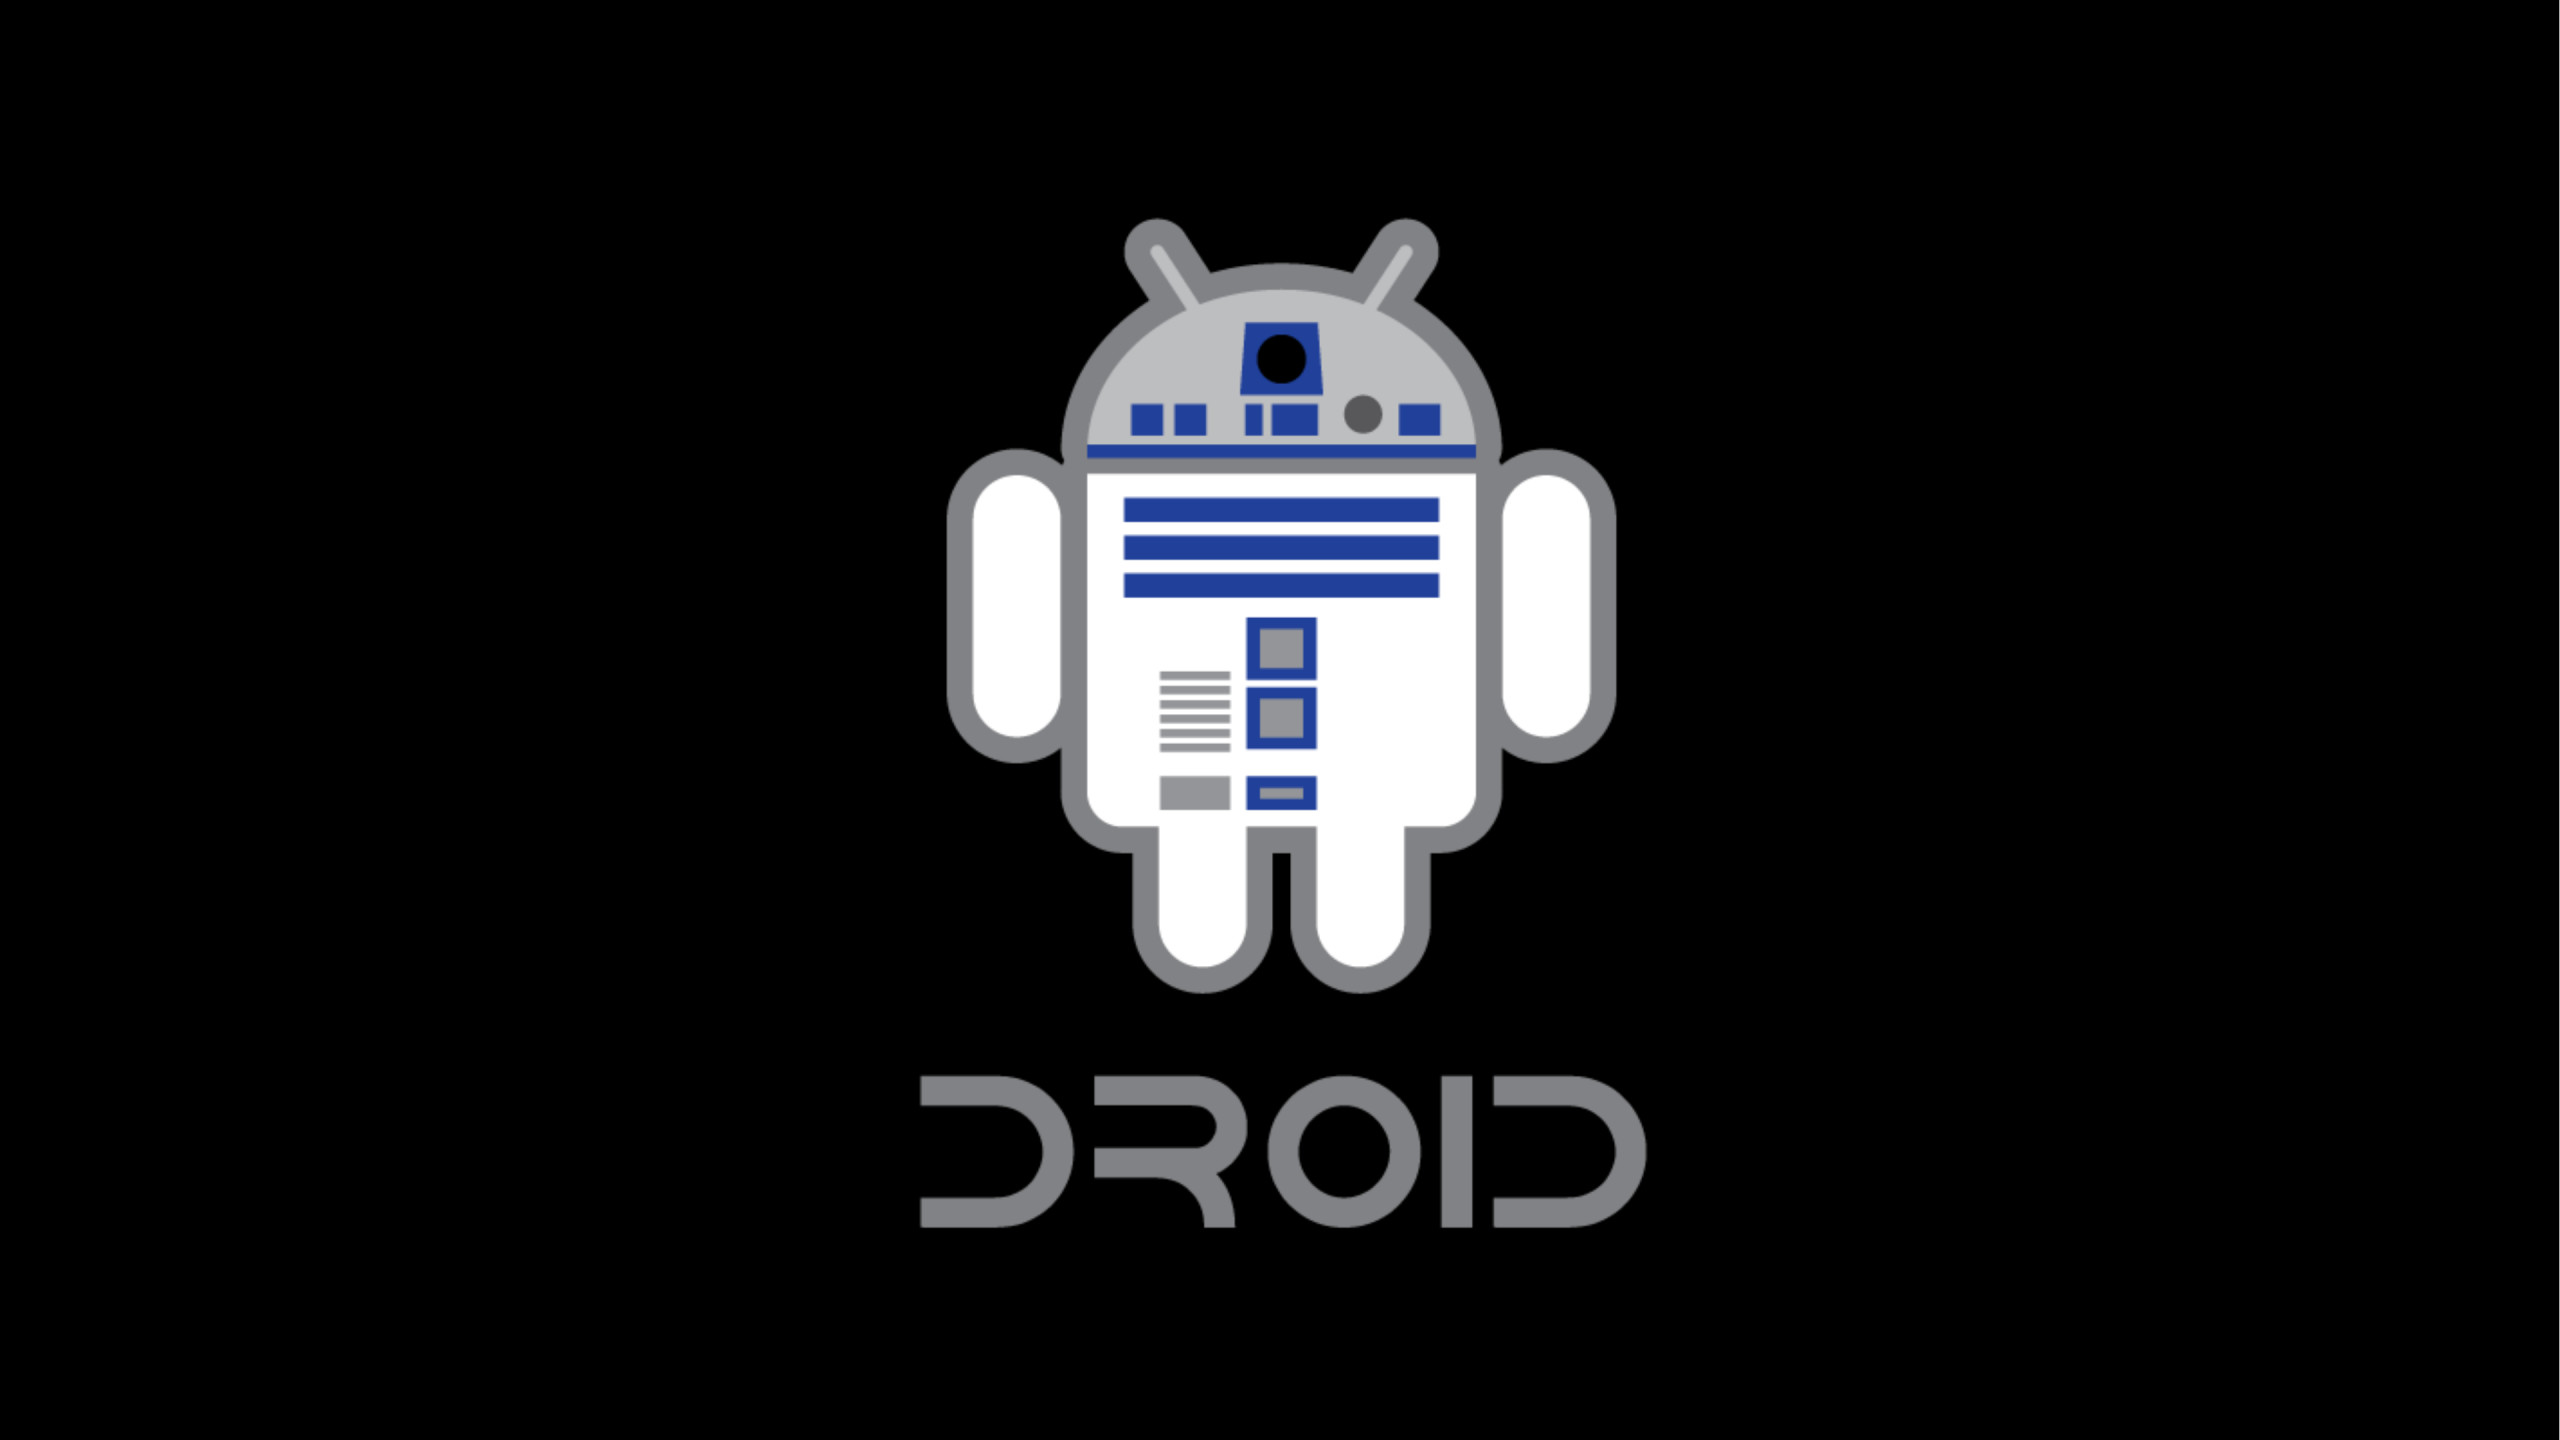 2560x1440 ... Star-Wars-Android-Logo-4K-Wallpaper-